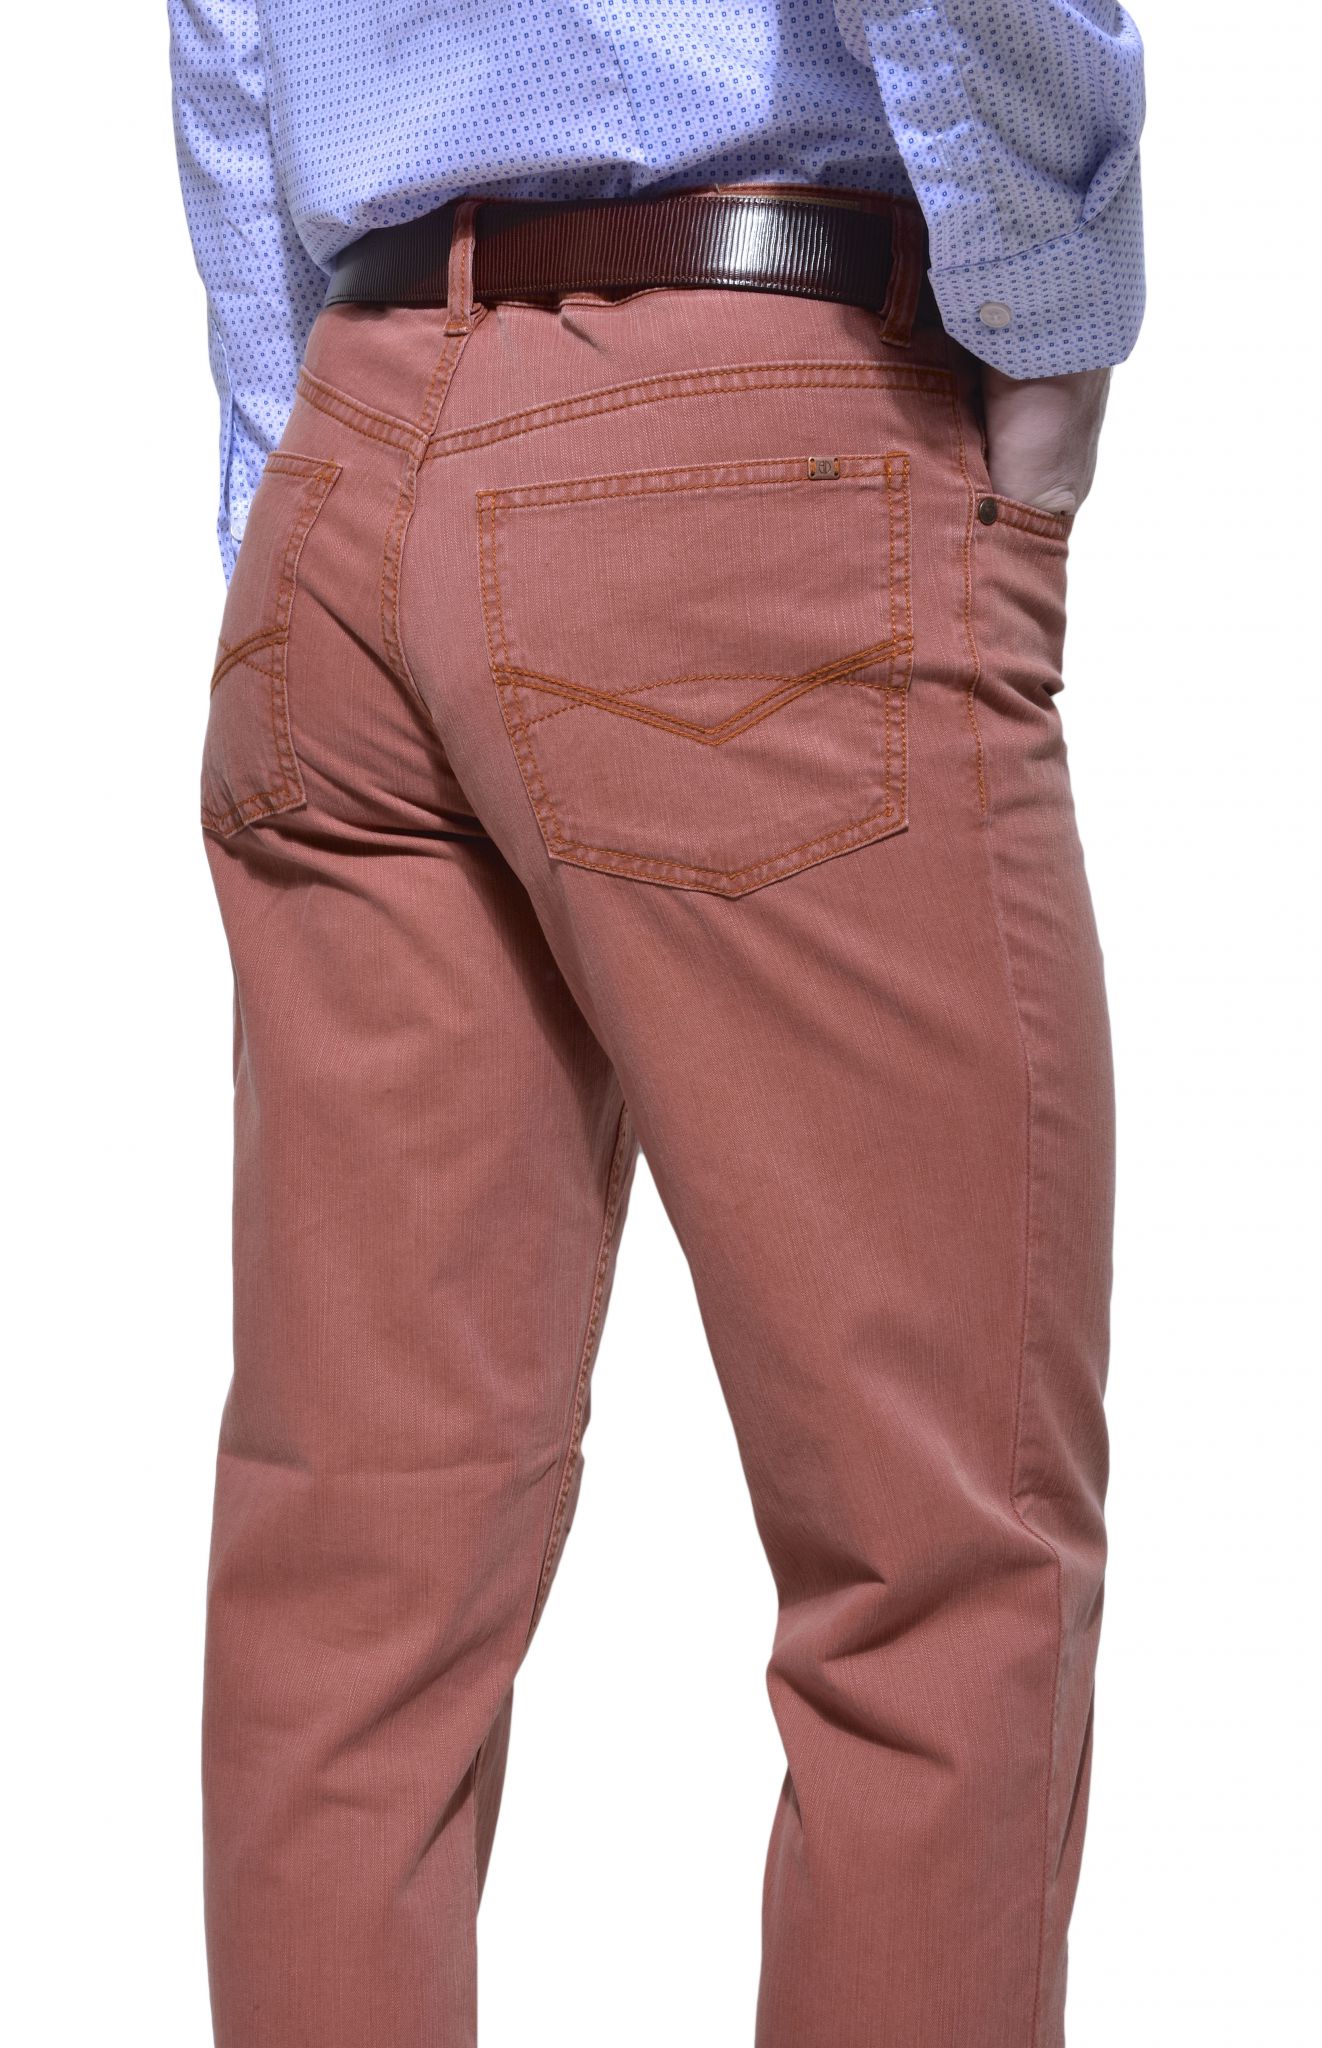 Salmon red jeans - Trousers - E-shop | alaindelon.co.uk